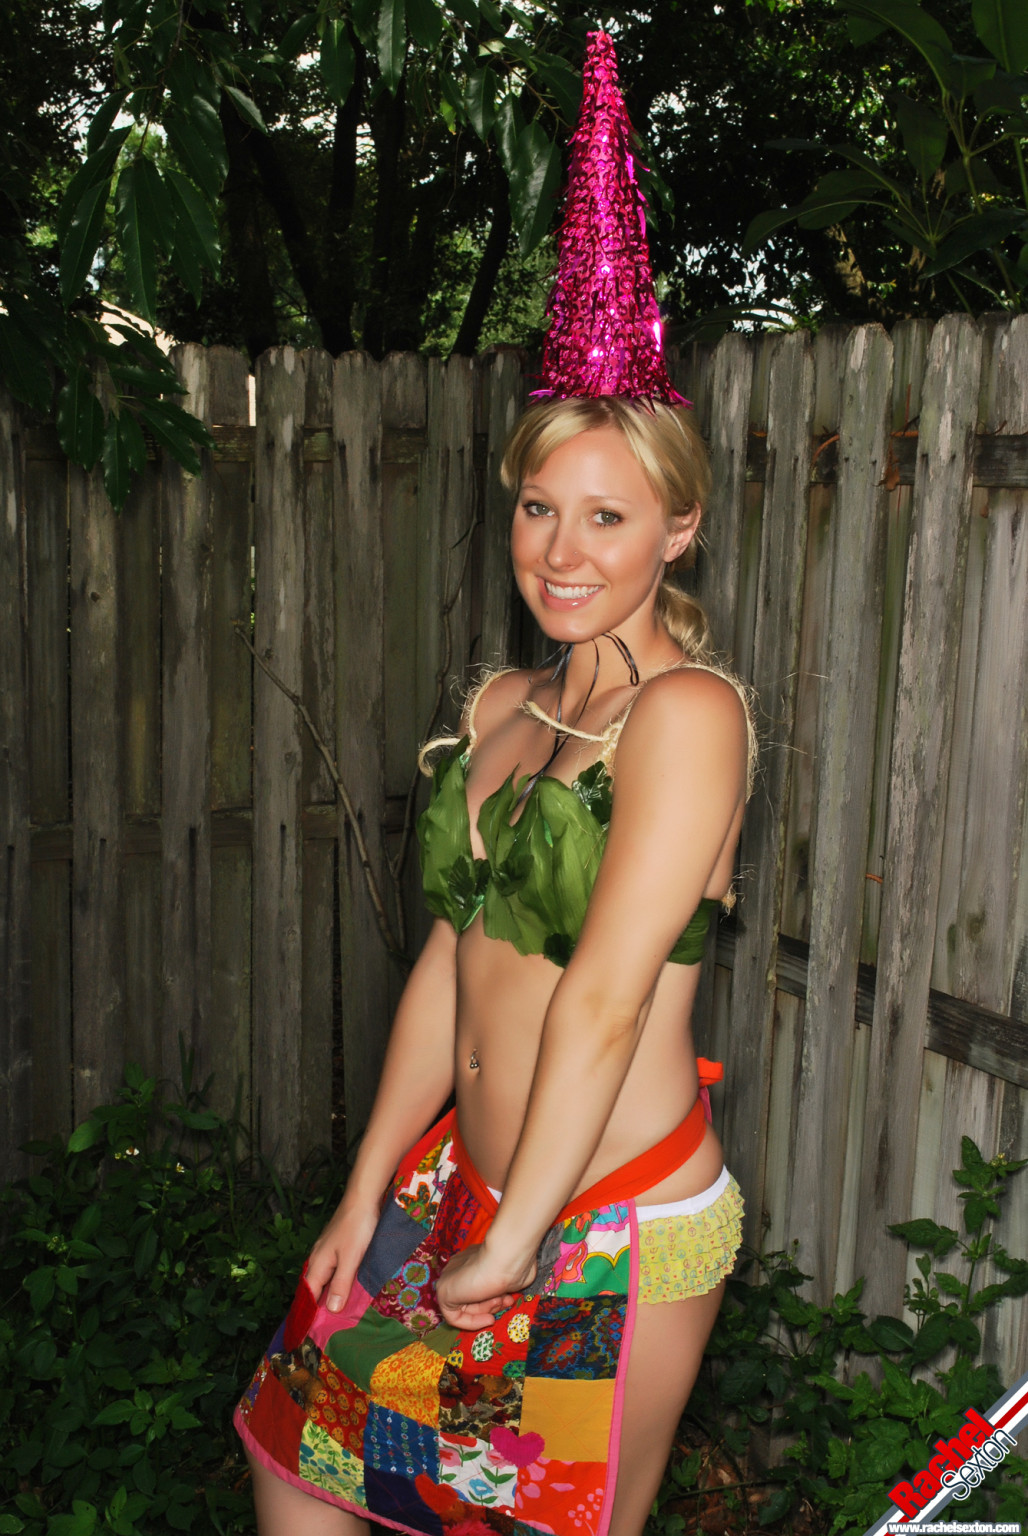 Rachel sexton is gnome alone erotic dancing in the yard